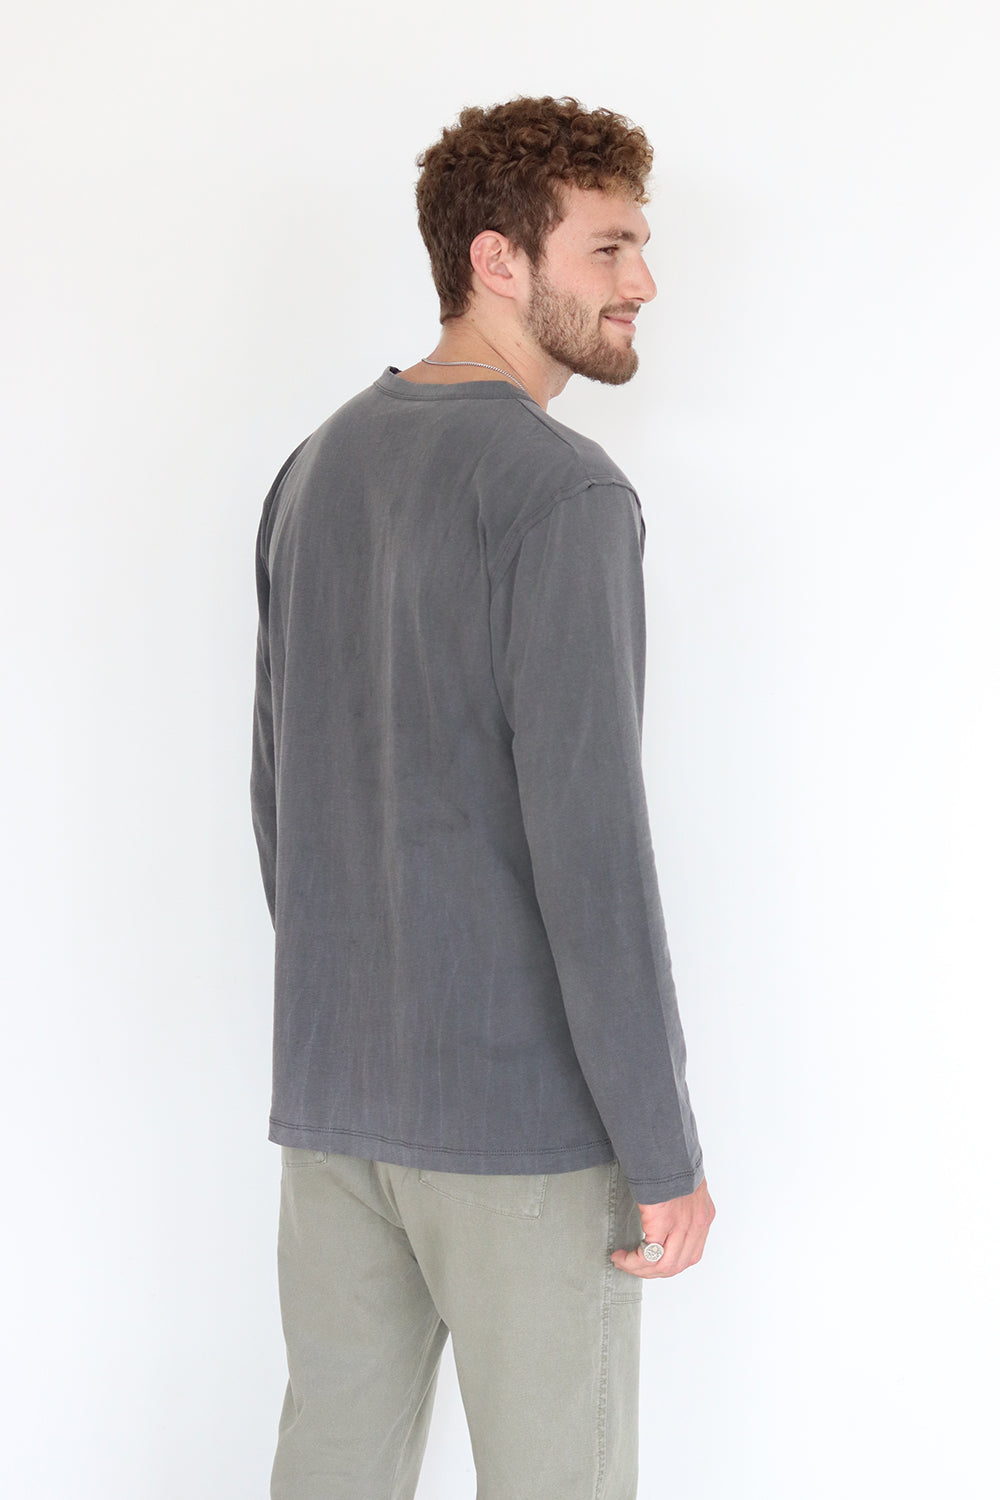 Charcoal Color Long Sleeve T-Shirt